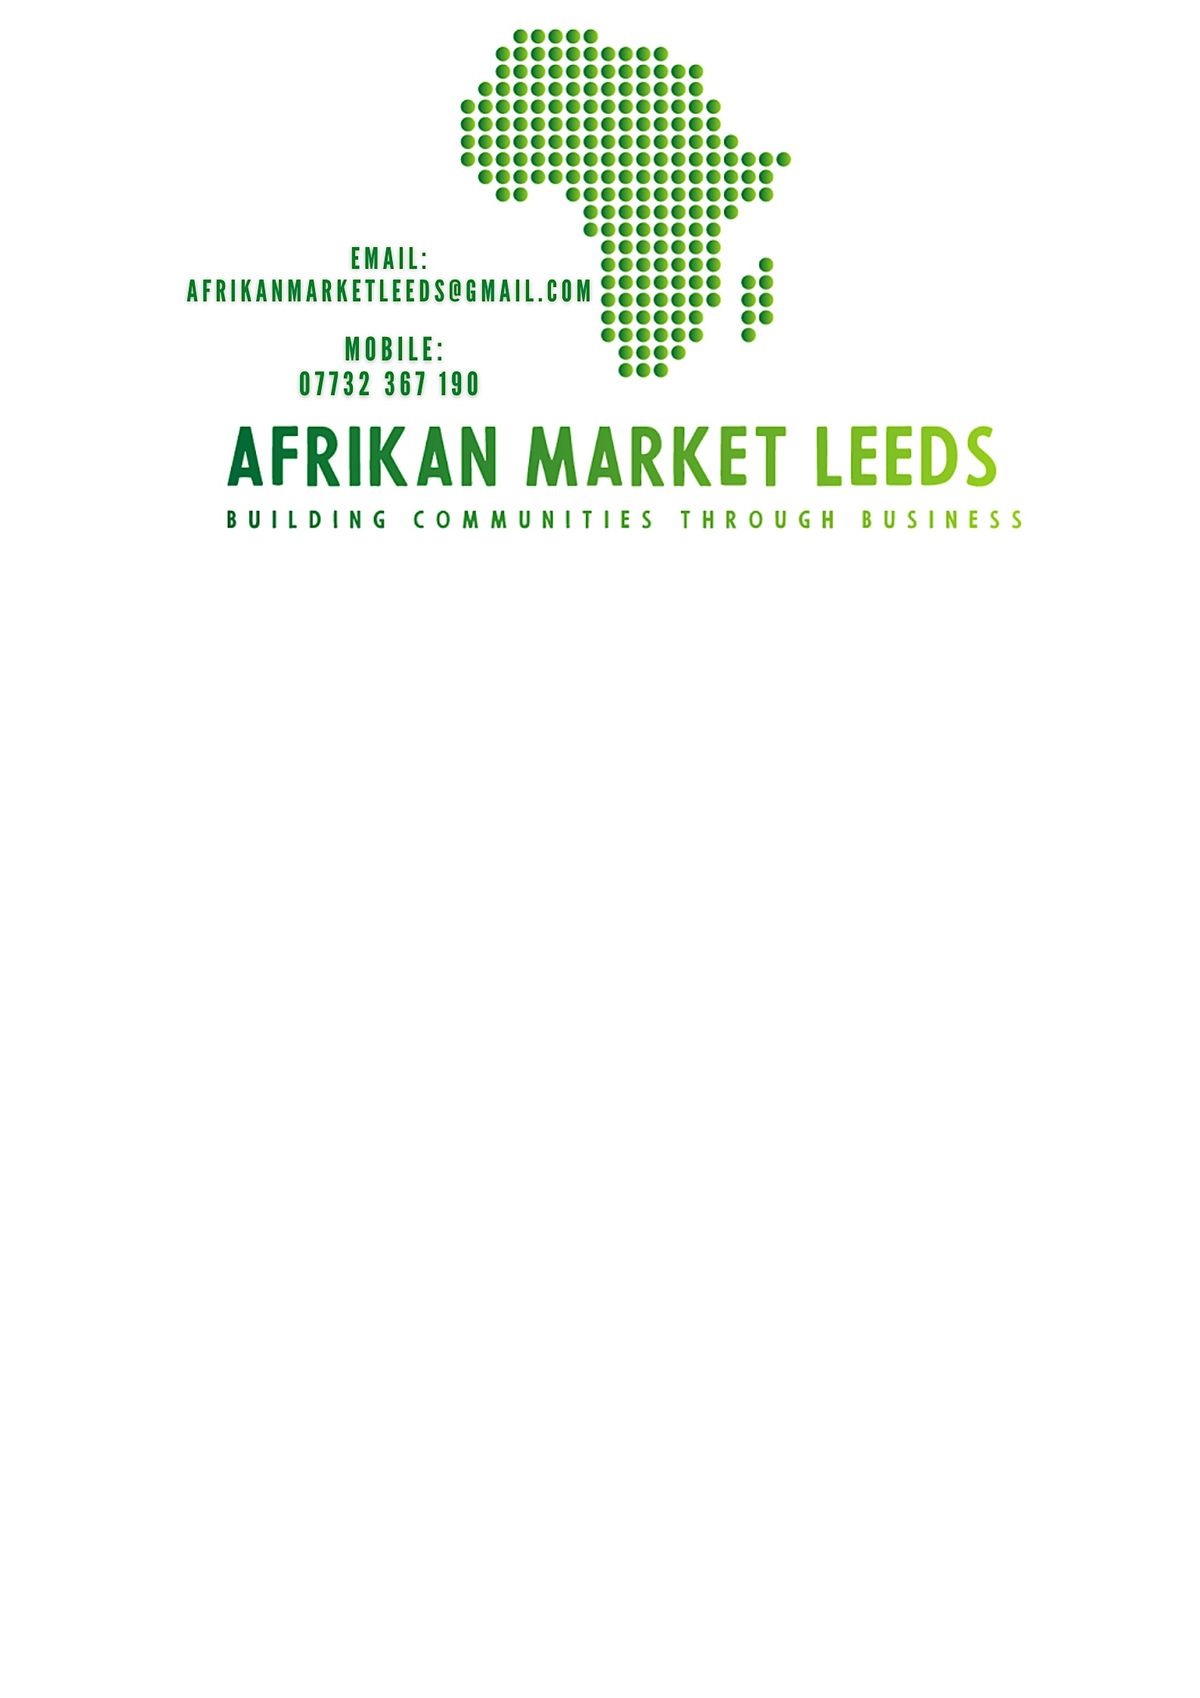 Afrikan Market Leeds - Leeds West Indian Centre